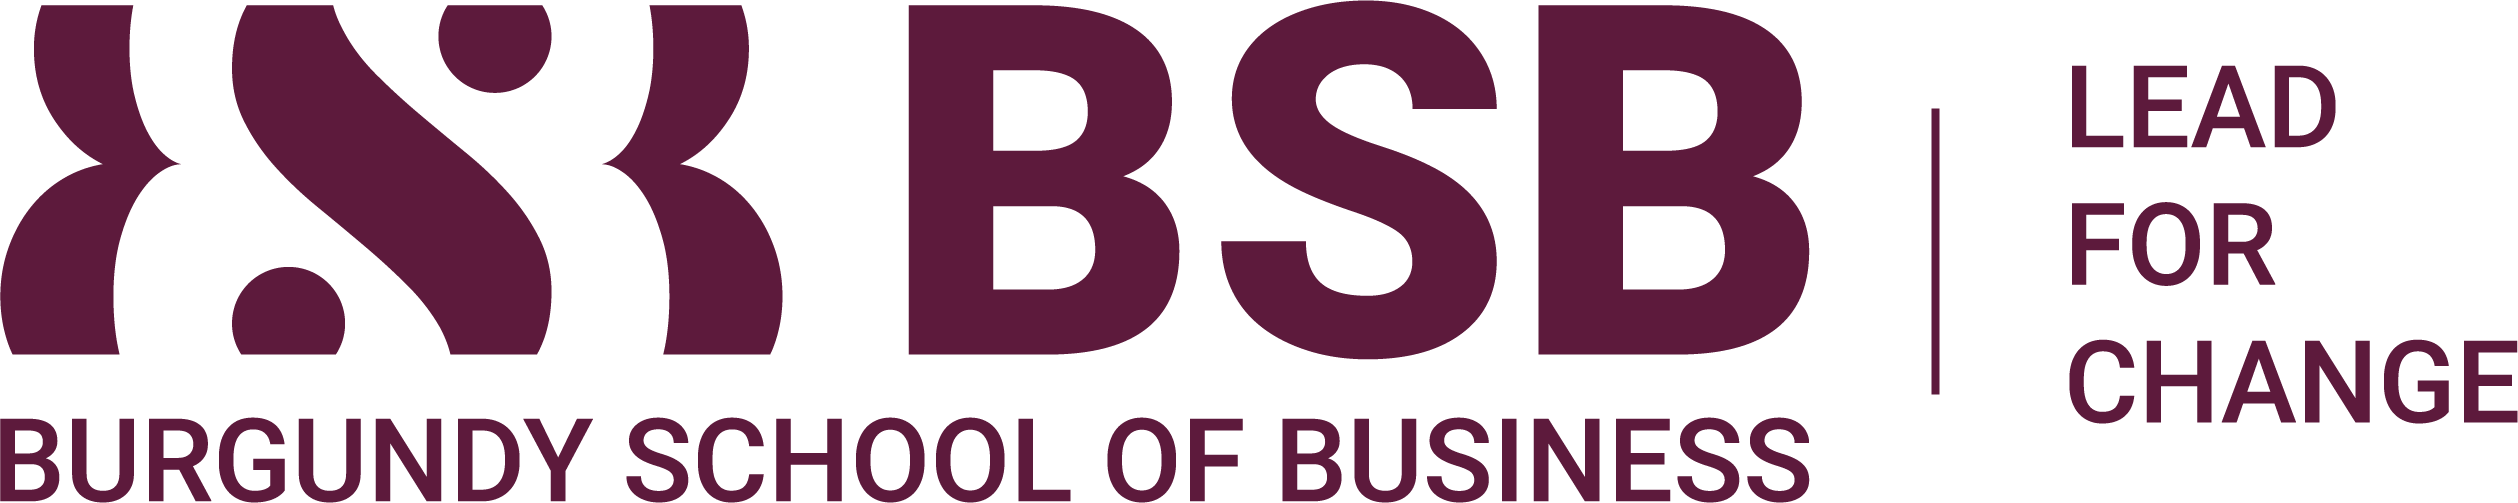 BSB_logo_LFC_burgundy